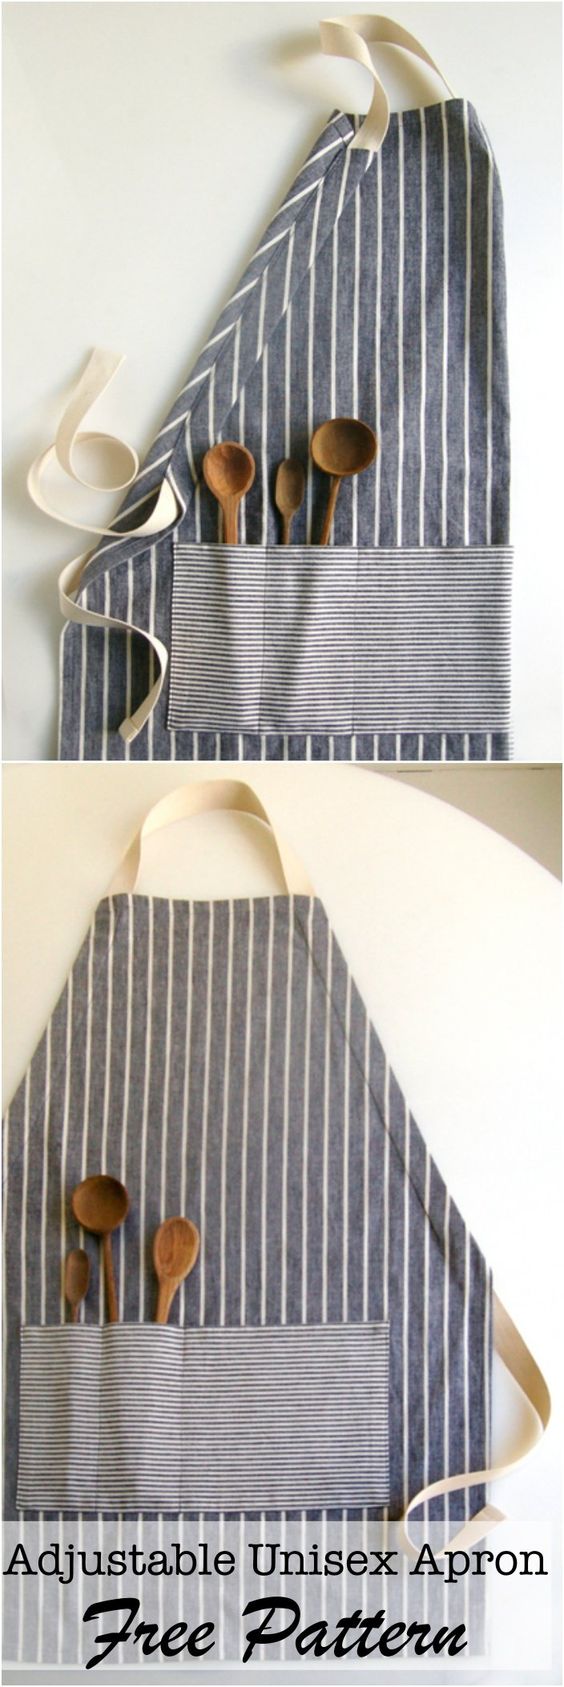 DIY adjustable apron over